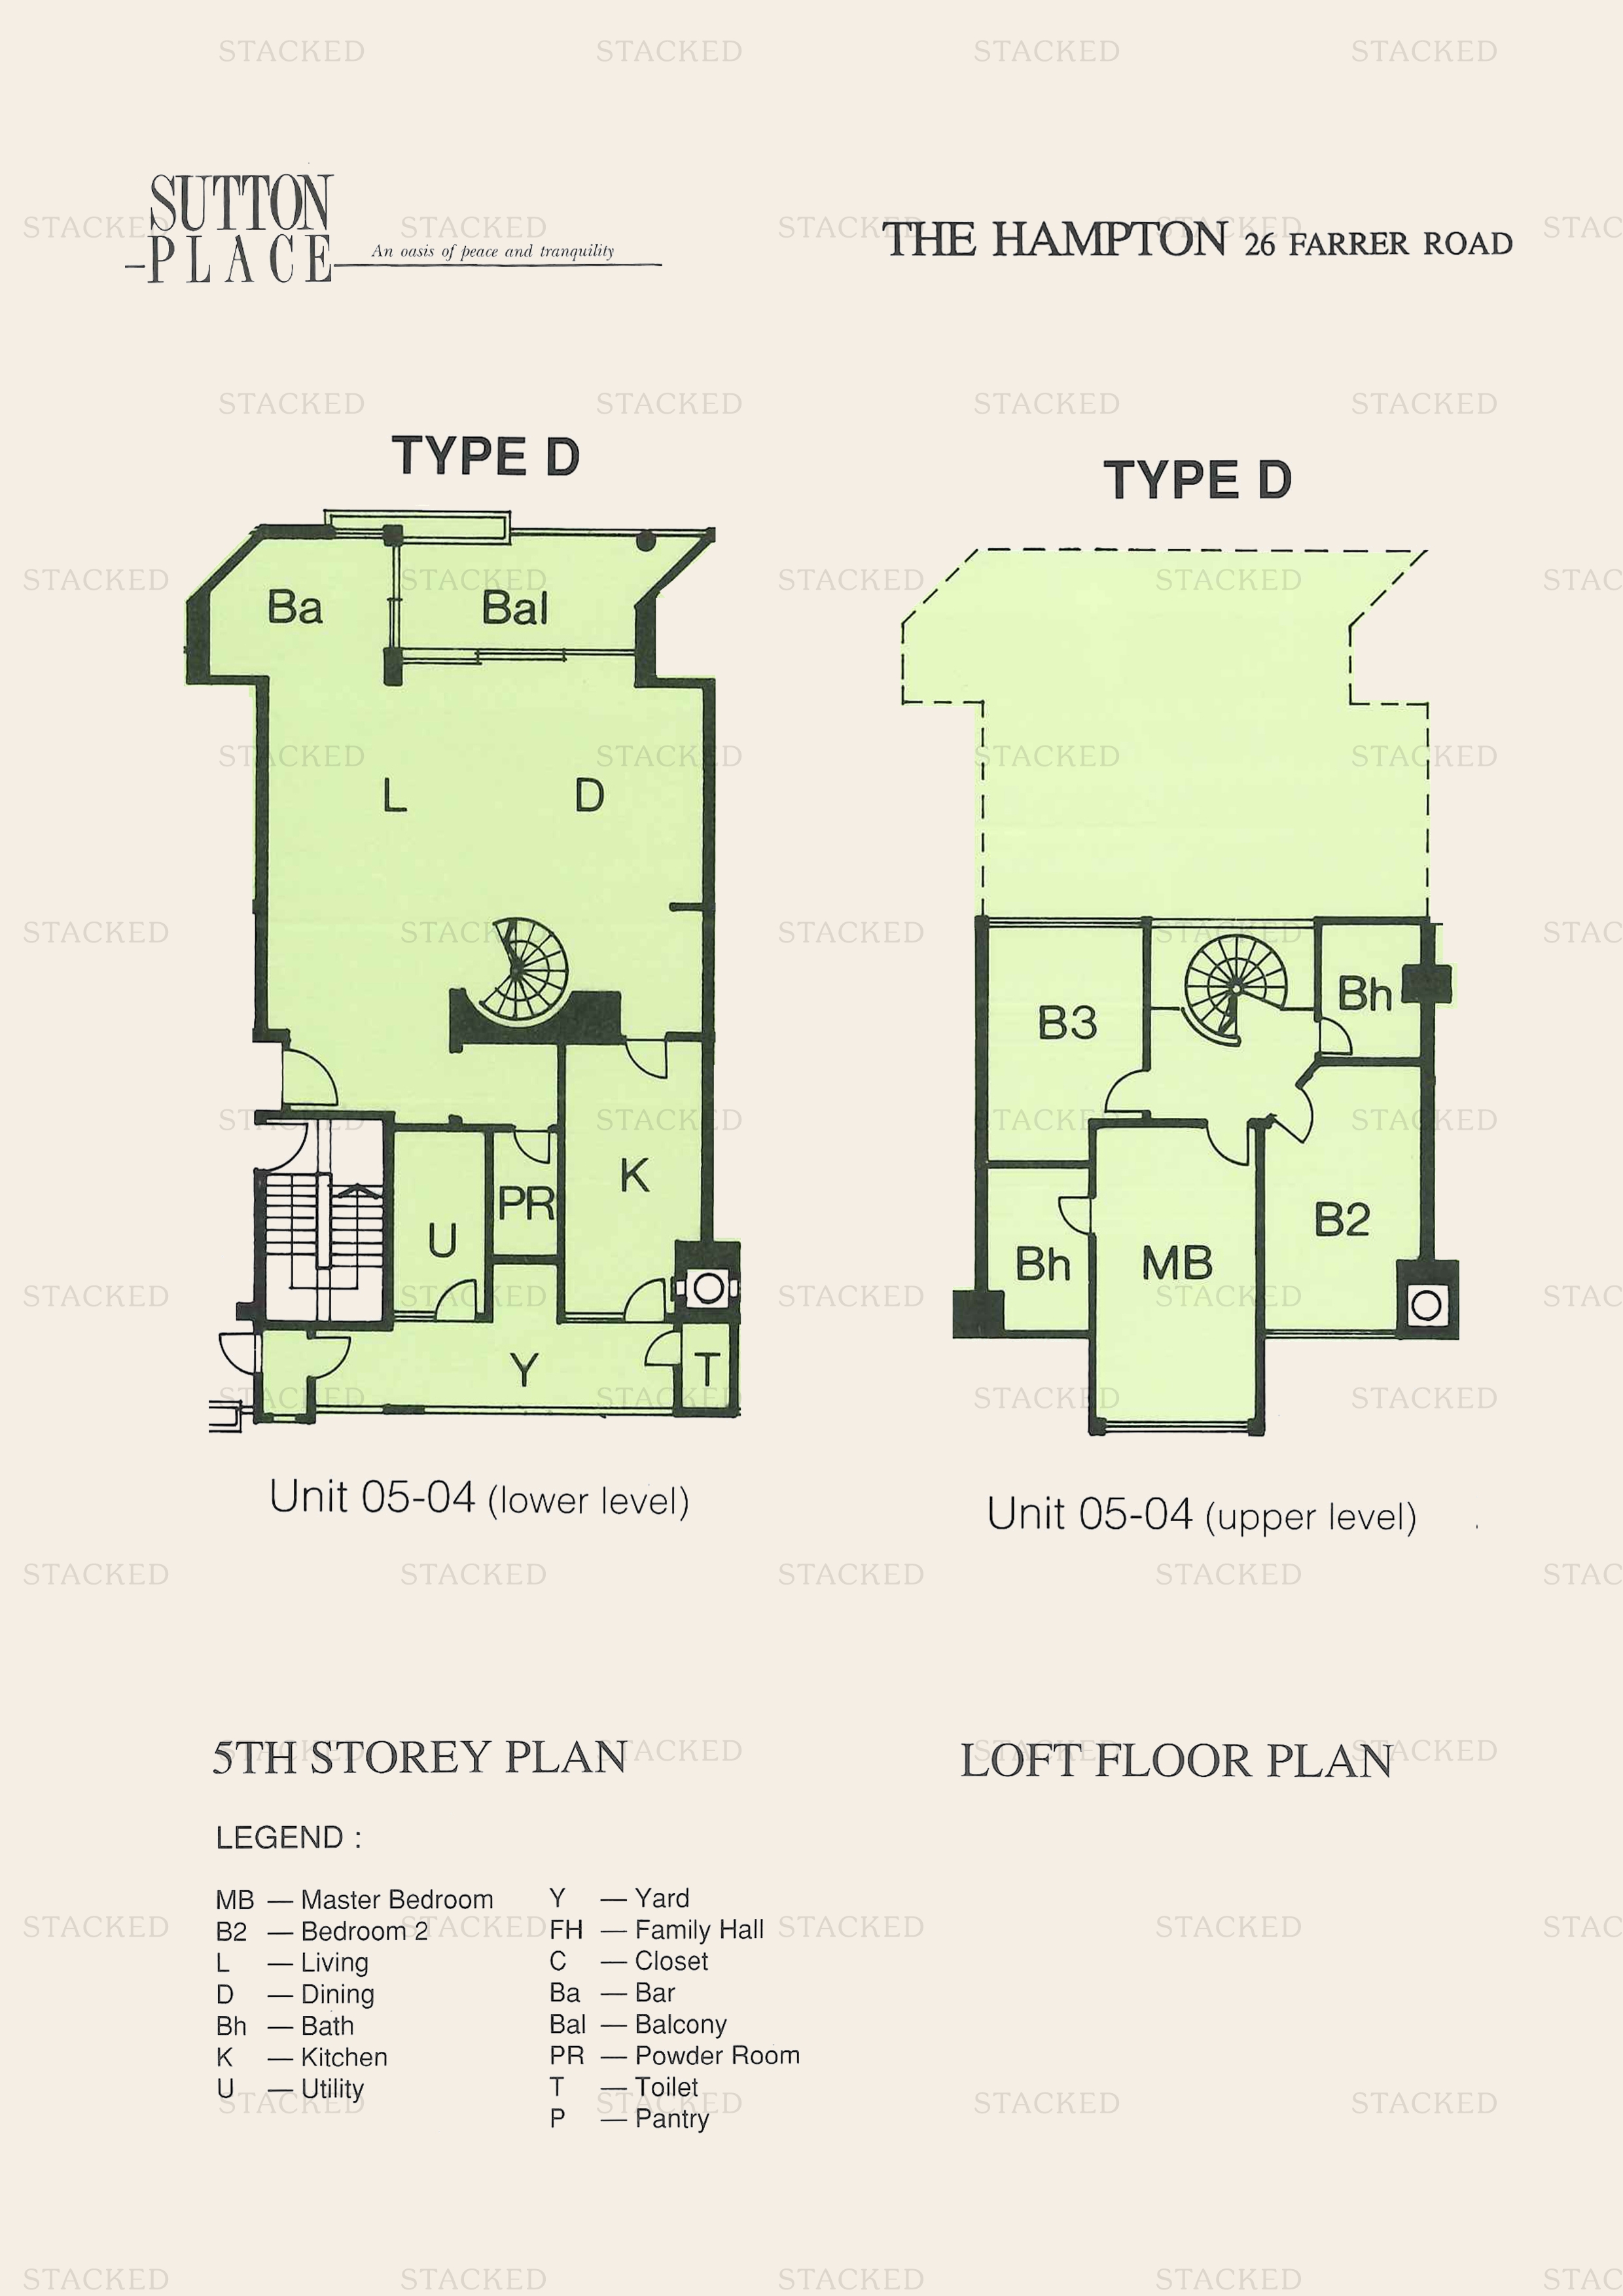 Sutton Place floor plan